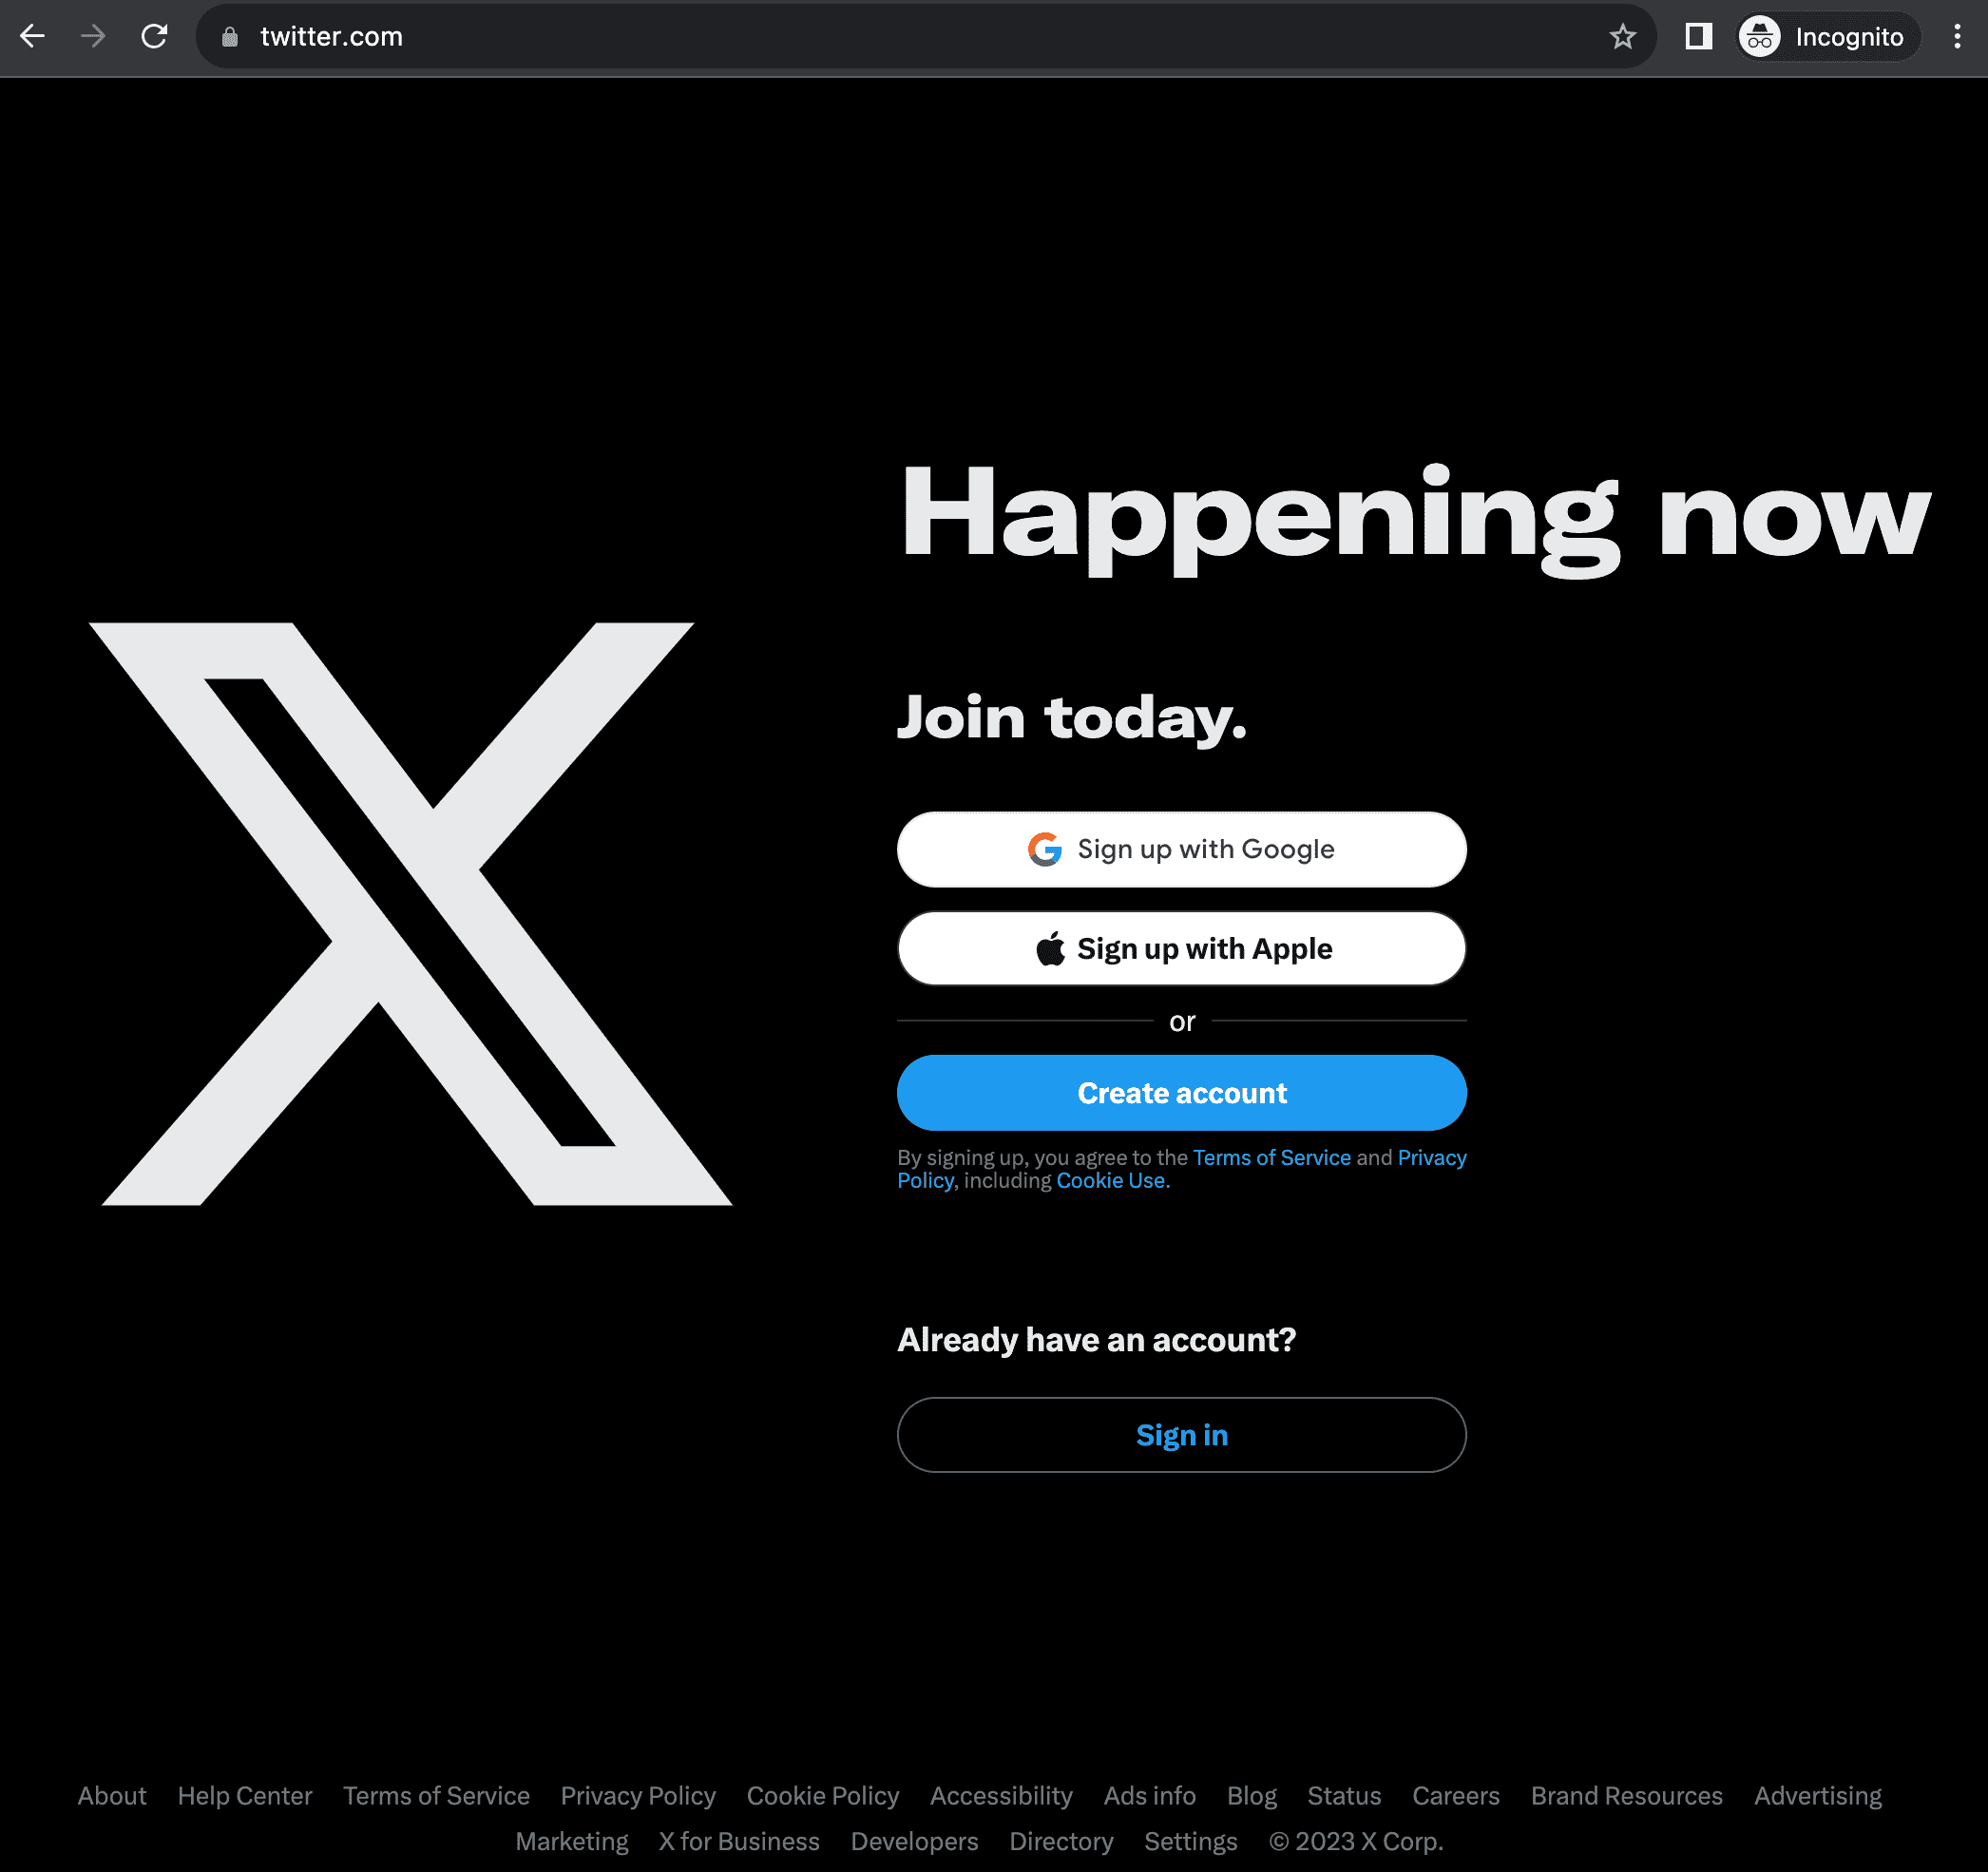 x.com in 2023